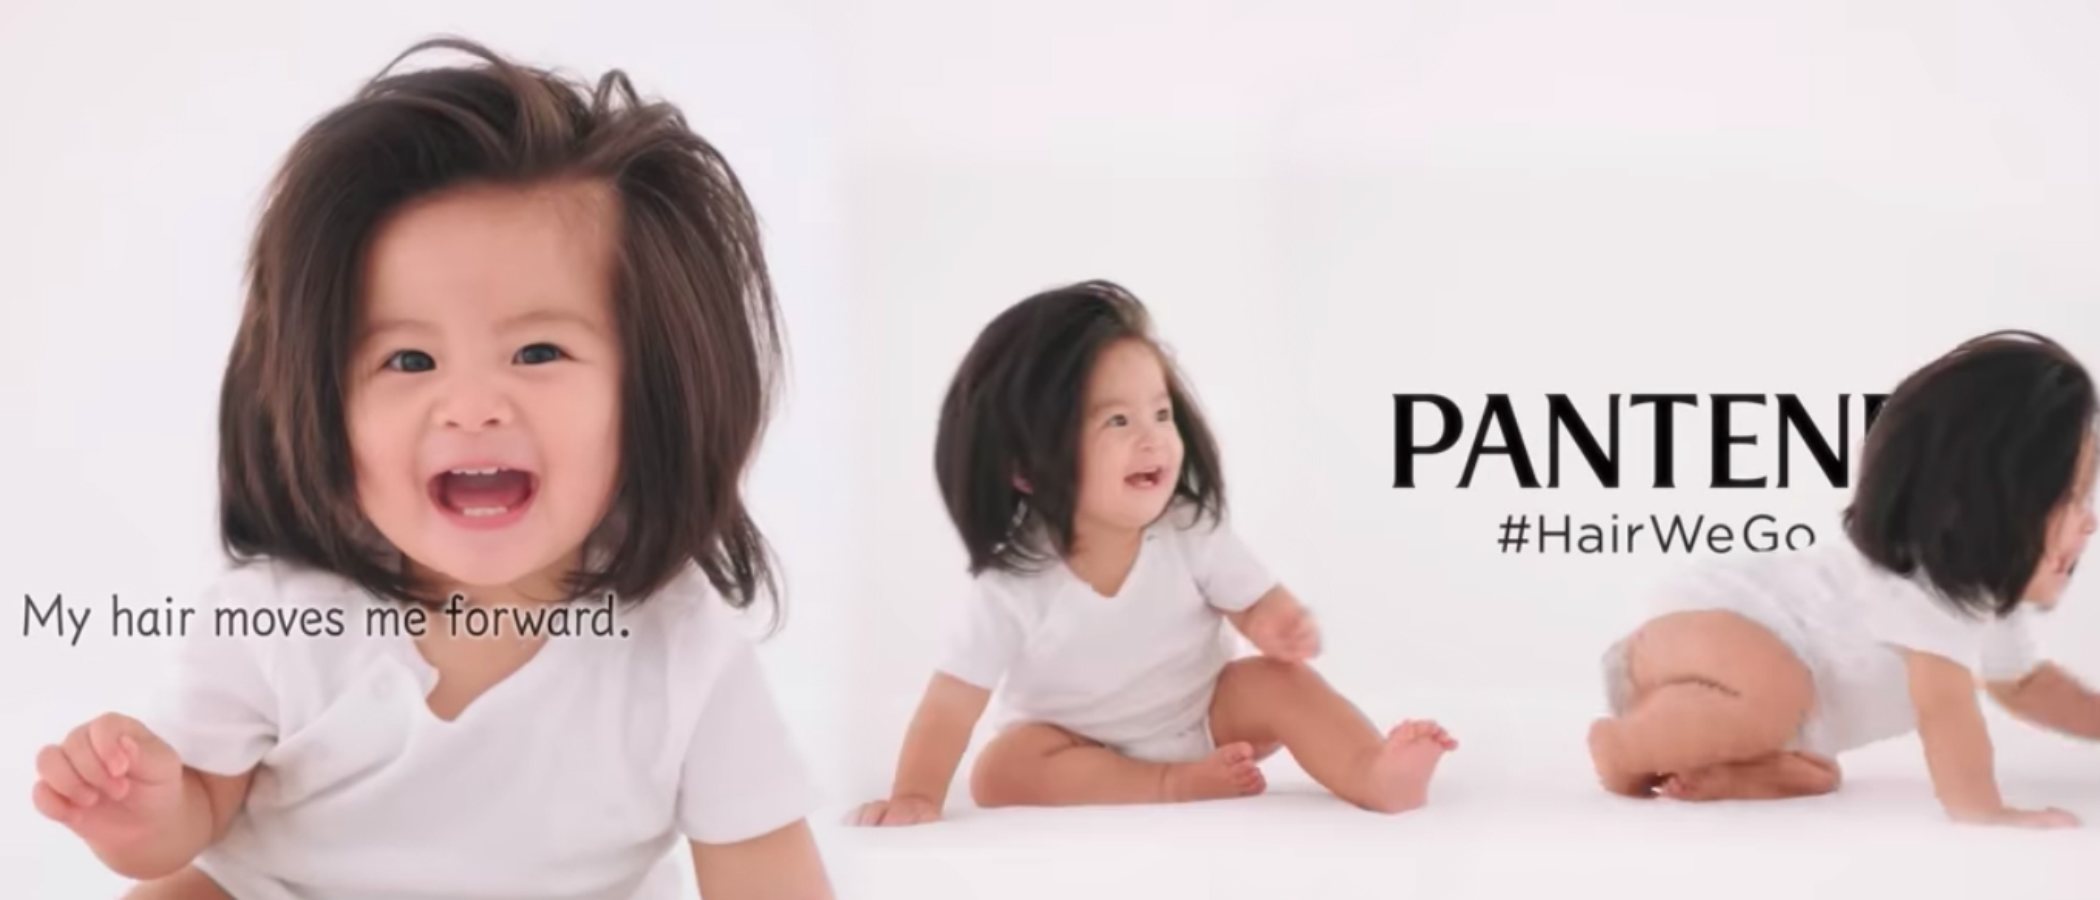 Pantene ficha como embajadora a Baby Chanco, una niña de tan solo 12 meses